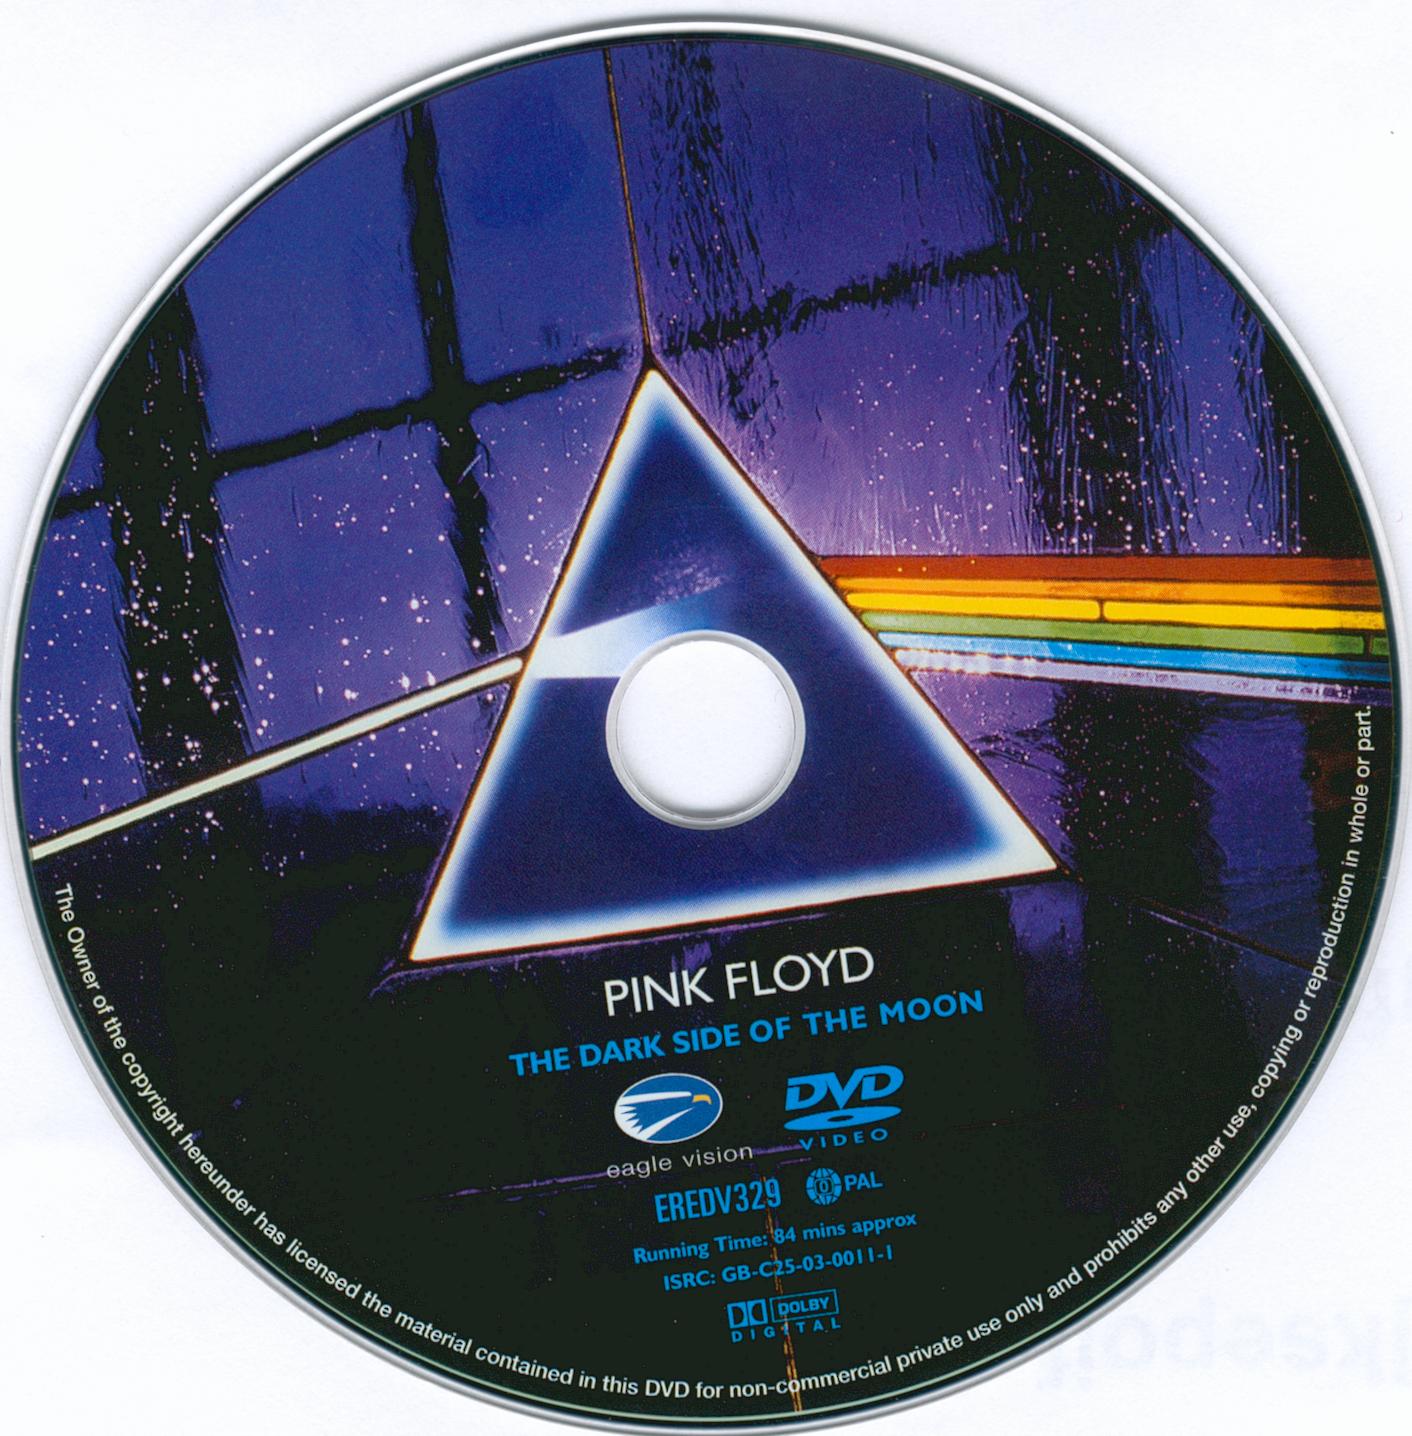 Пинк Флойд Dark Side of the Moon. The Dark Side of the Moon Pink Floyd оригинальная обложка. The Dark Side of the Moon Pink Floyd планетарий. Pink floyd dark side слушать